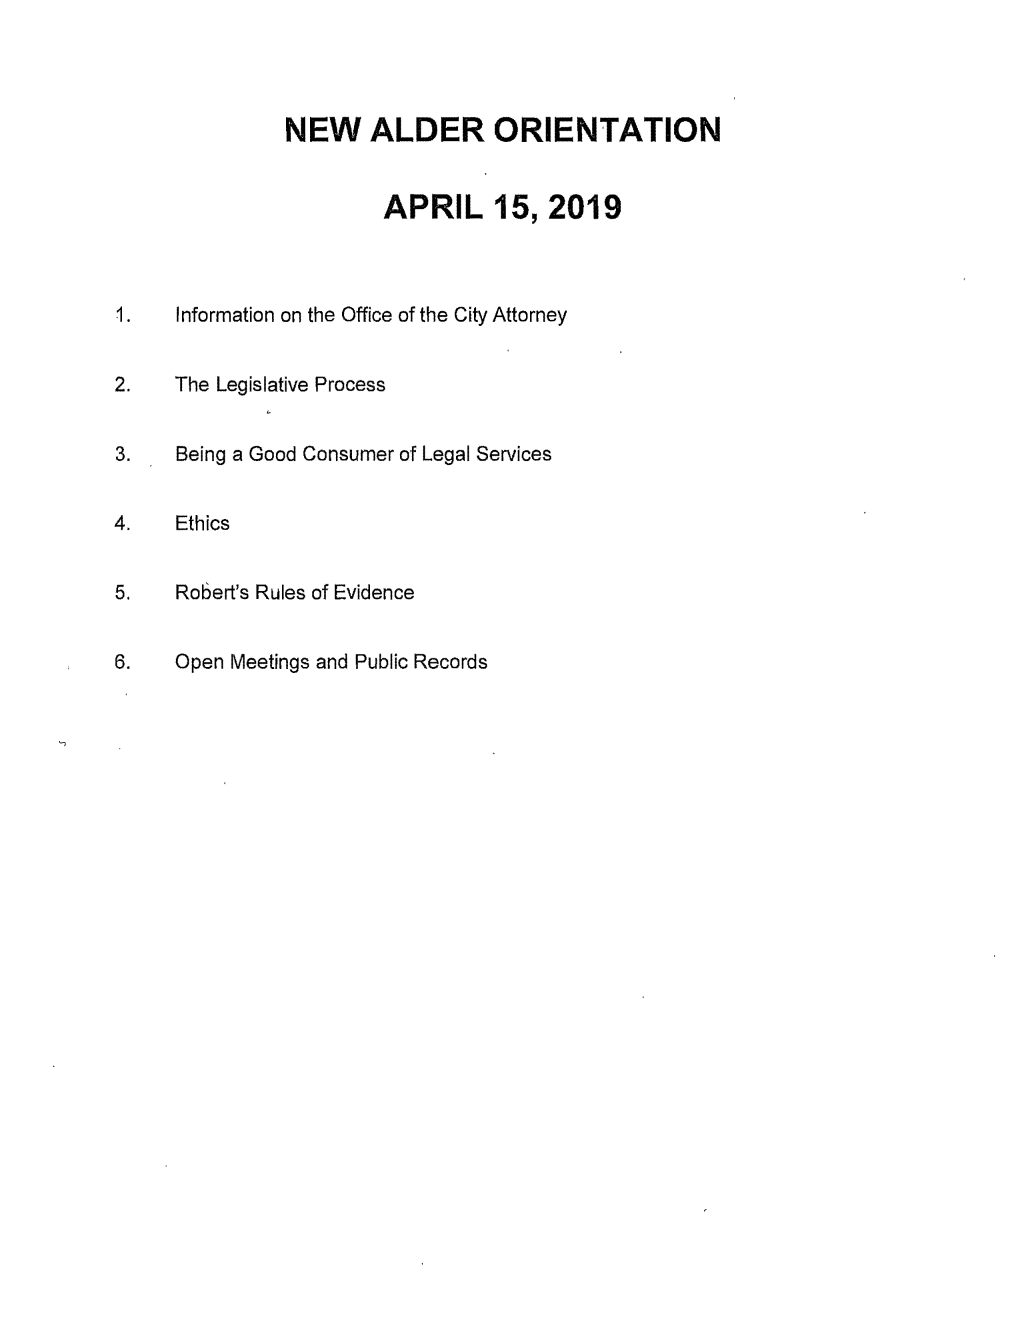 New Alder Orientation April 15, 2019